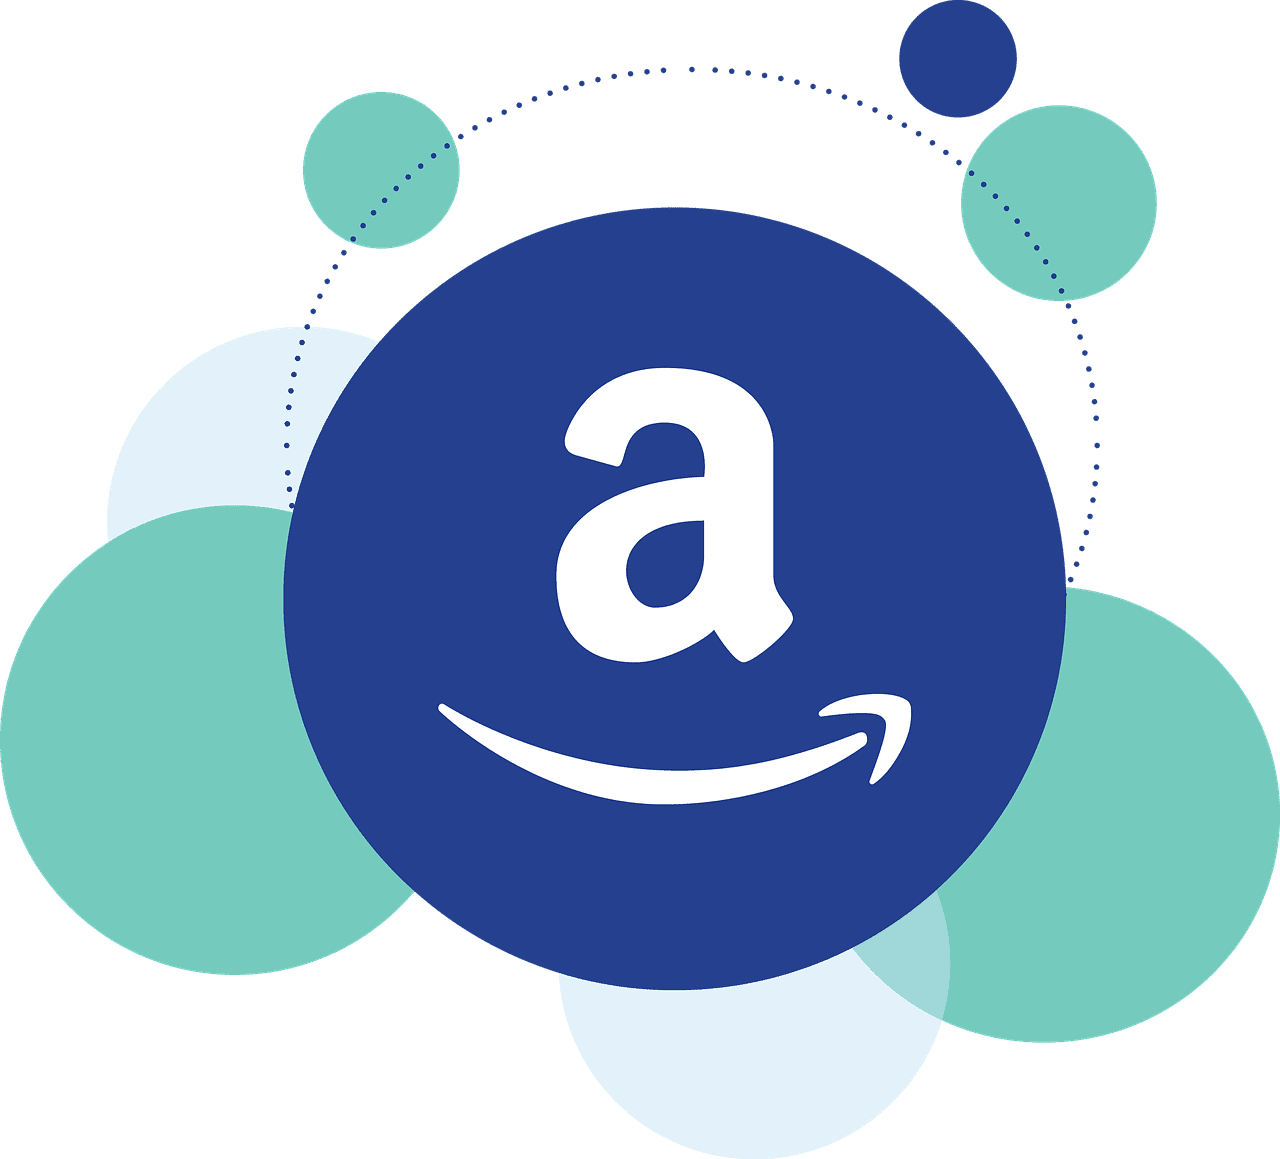 StrategyDriven Entrepreneurship Article |Selling on Amazon|How To Start Selling On Amazon